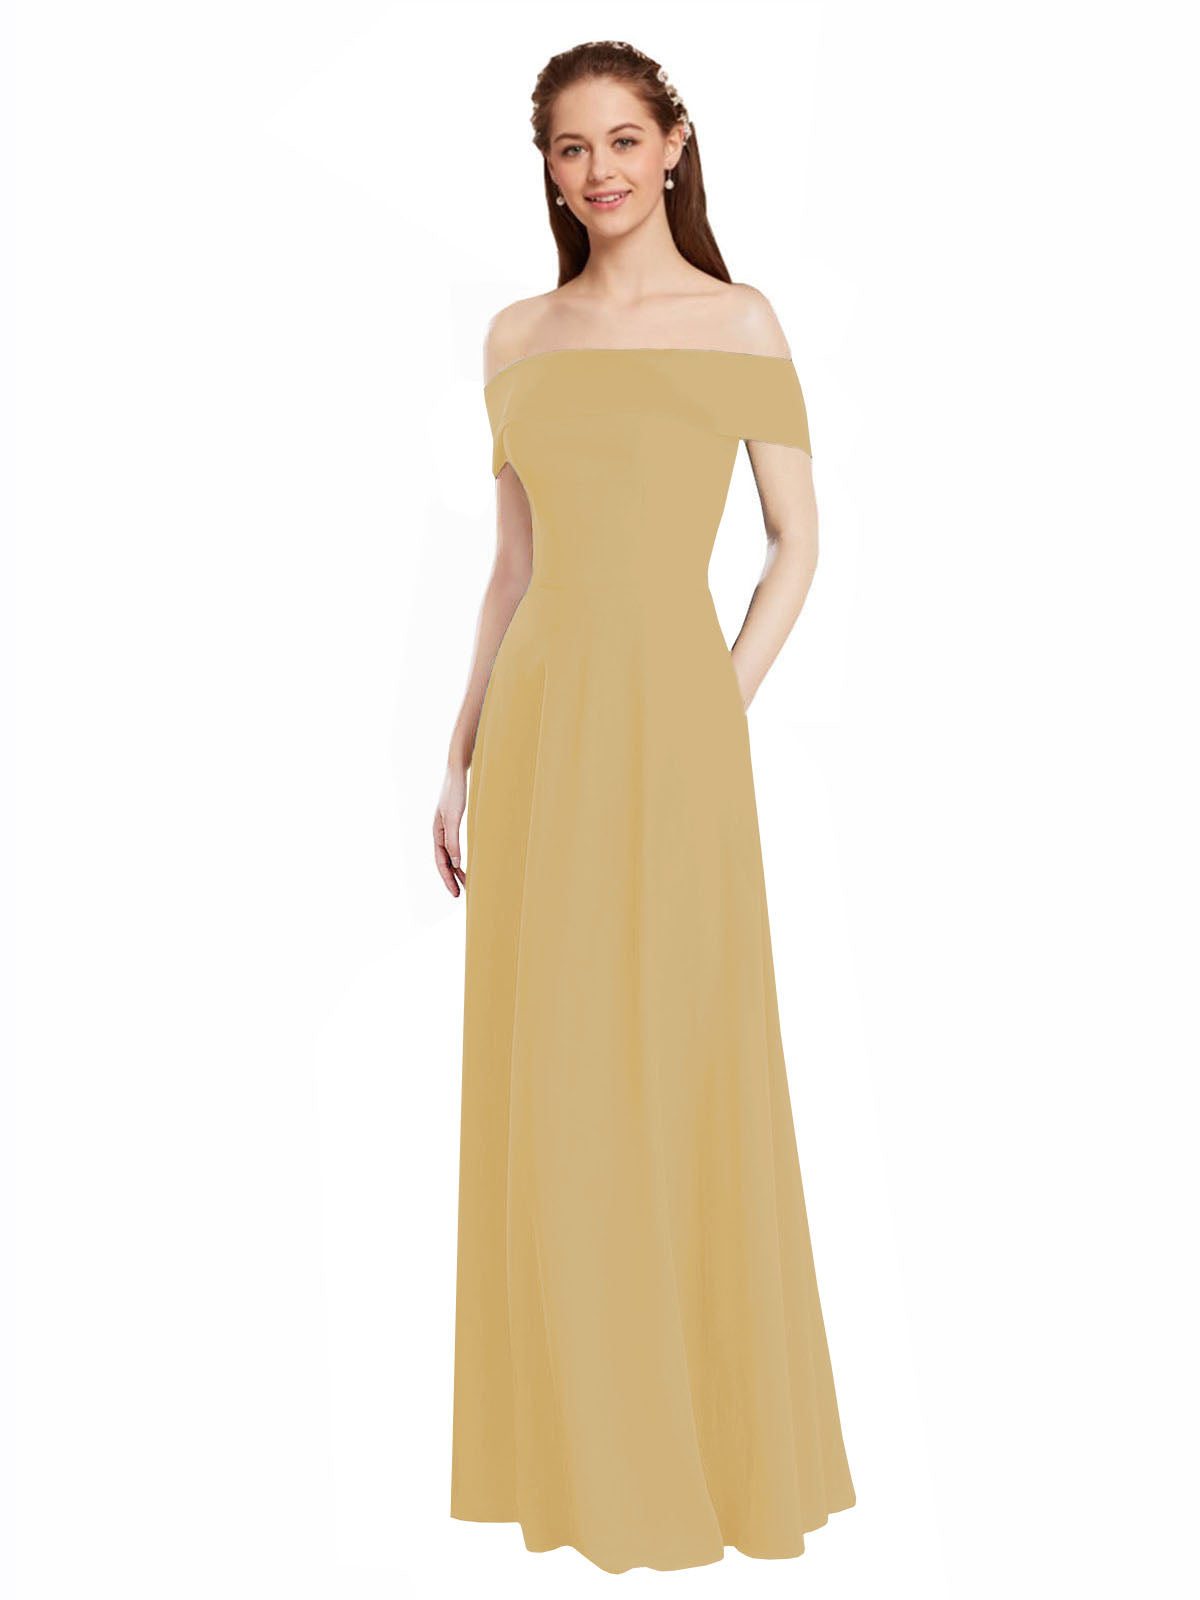 Gold A-Line Off the Shoulder Cap Sleeves Long Bridesmaid Dress Lina